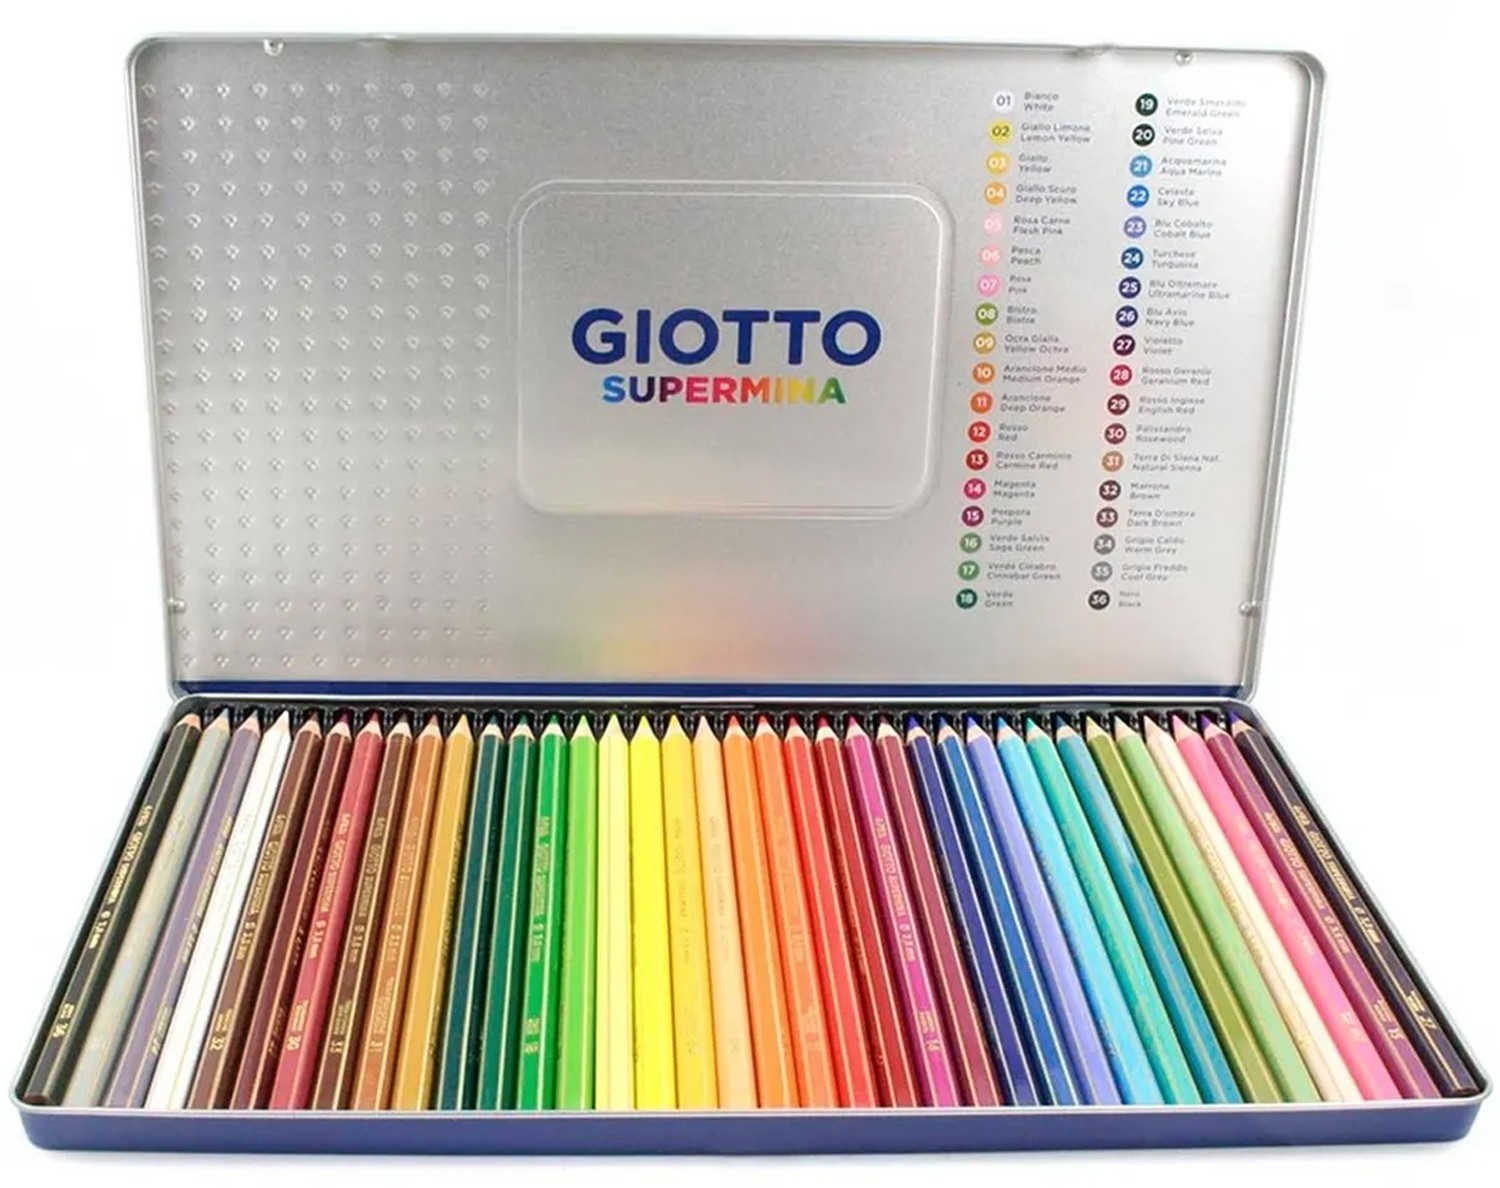 https://www.cromarti.cl/media/extendware/ewimageopt/media/inline/cc/e/giotto-supermina-lapices-de-colores-set-de-36-colores-dbf/Giotto-Supermina-Lapices-De-Colores-Set-De-36-Colores-31.jpg